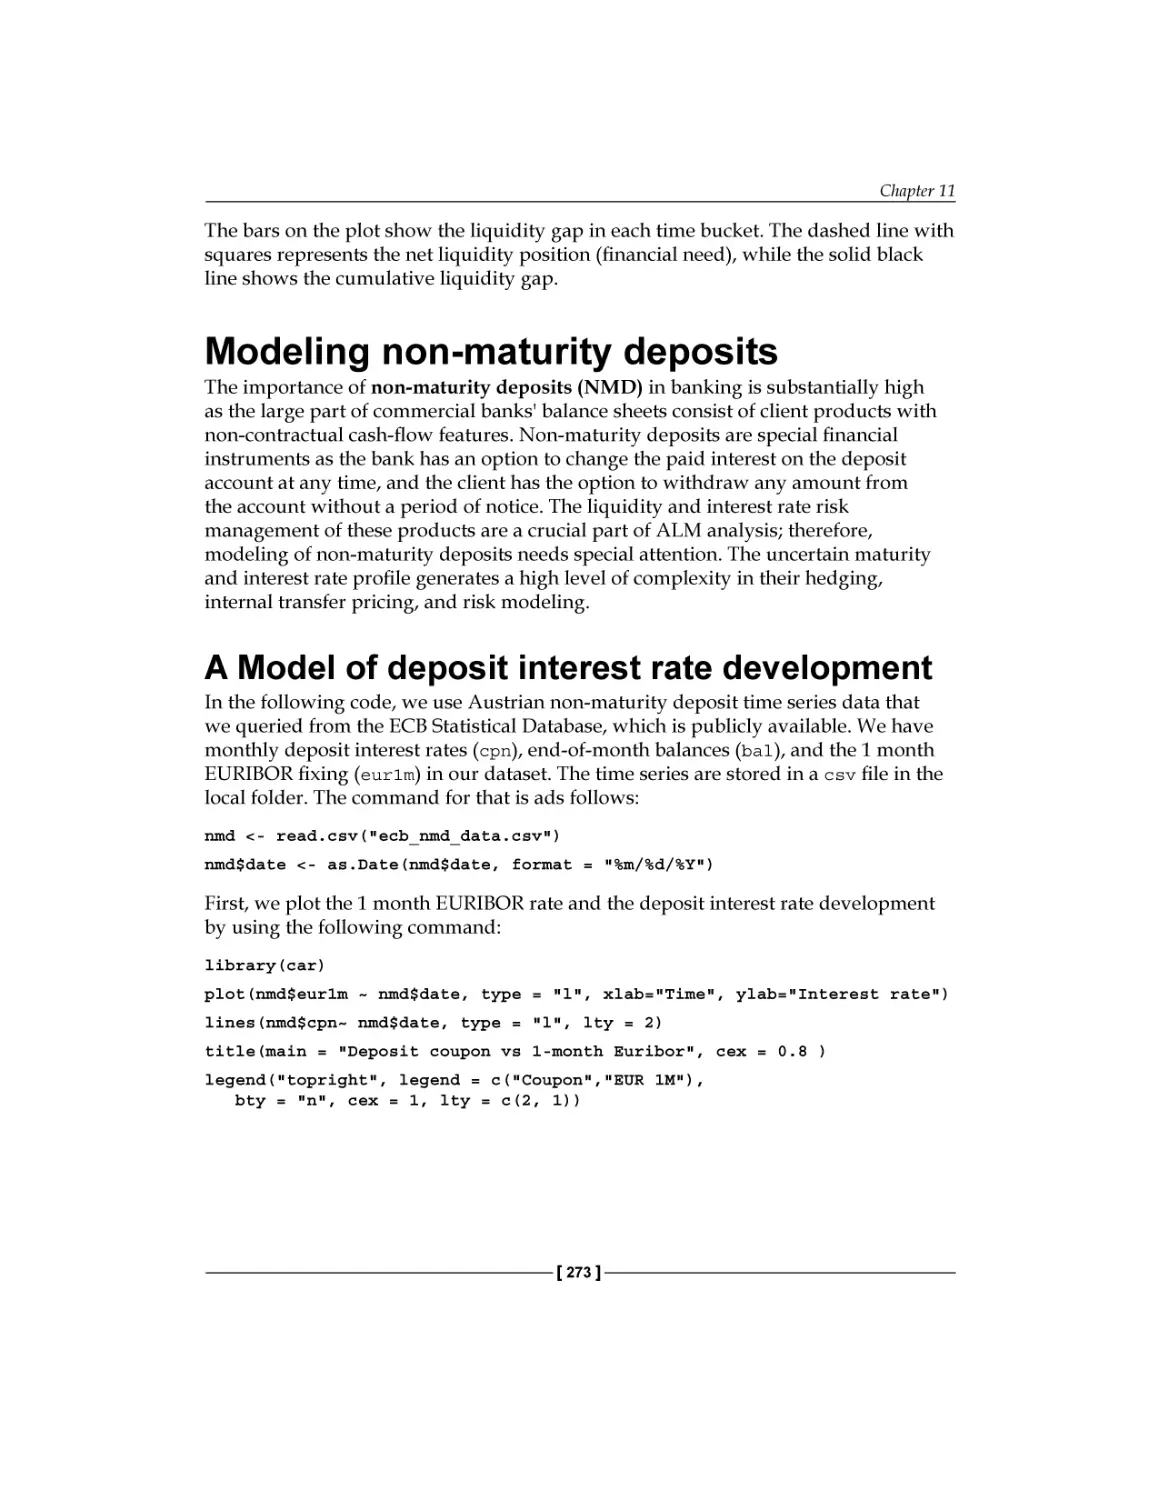 Modeling non-maturity deposits
Model of deposit interest rate development